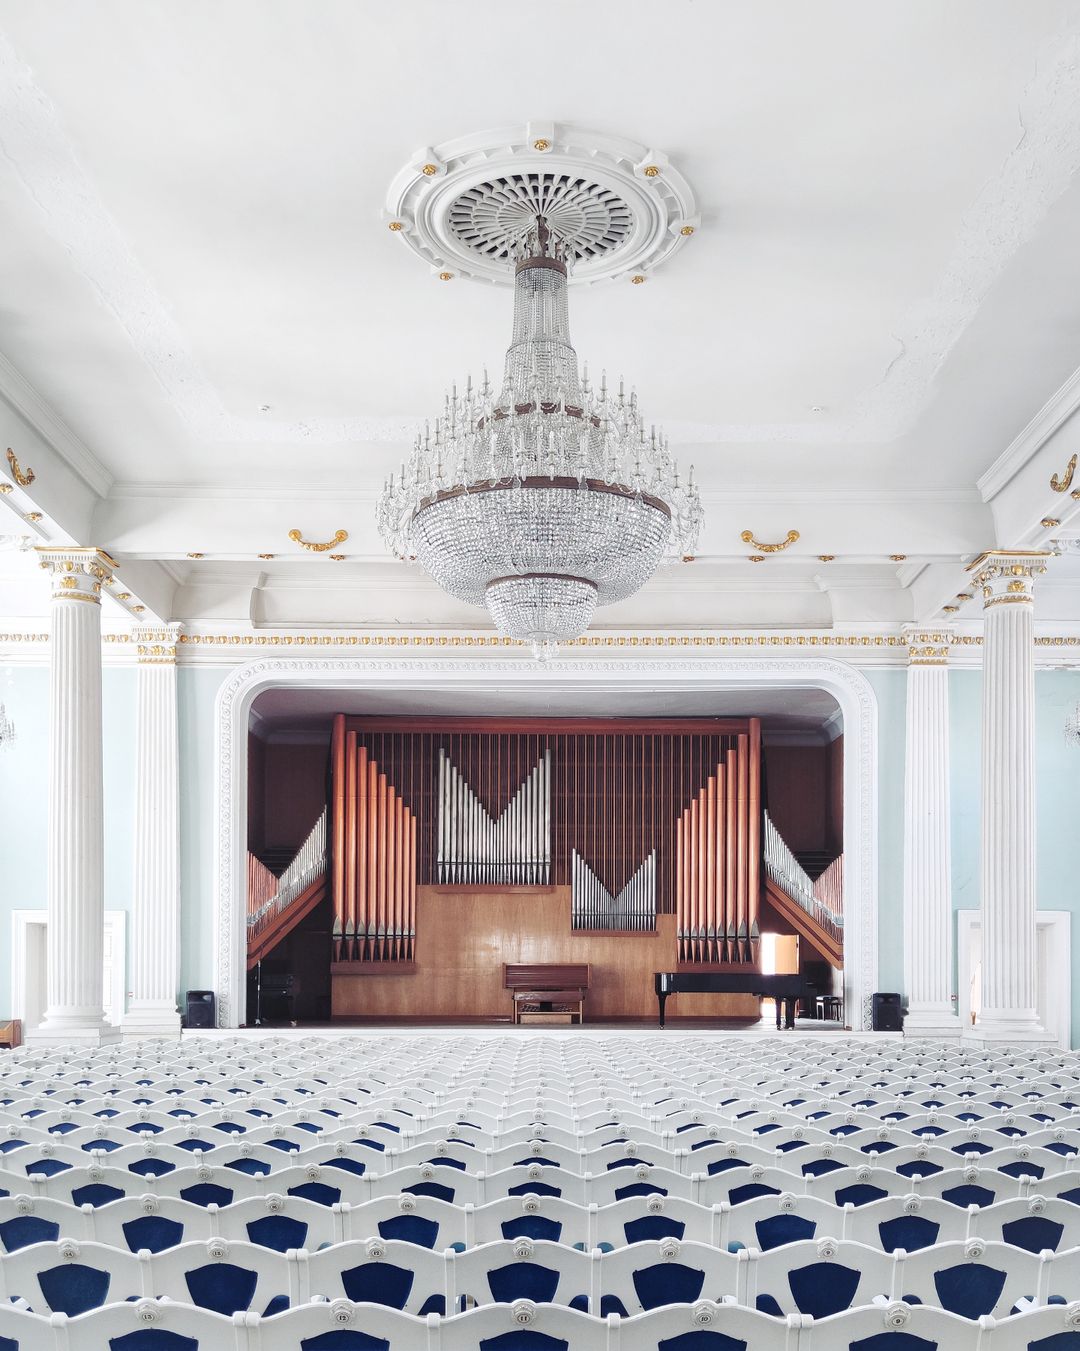  Organ Hall Chisinau - Best Architectural Buildings in Chisinau